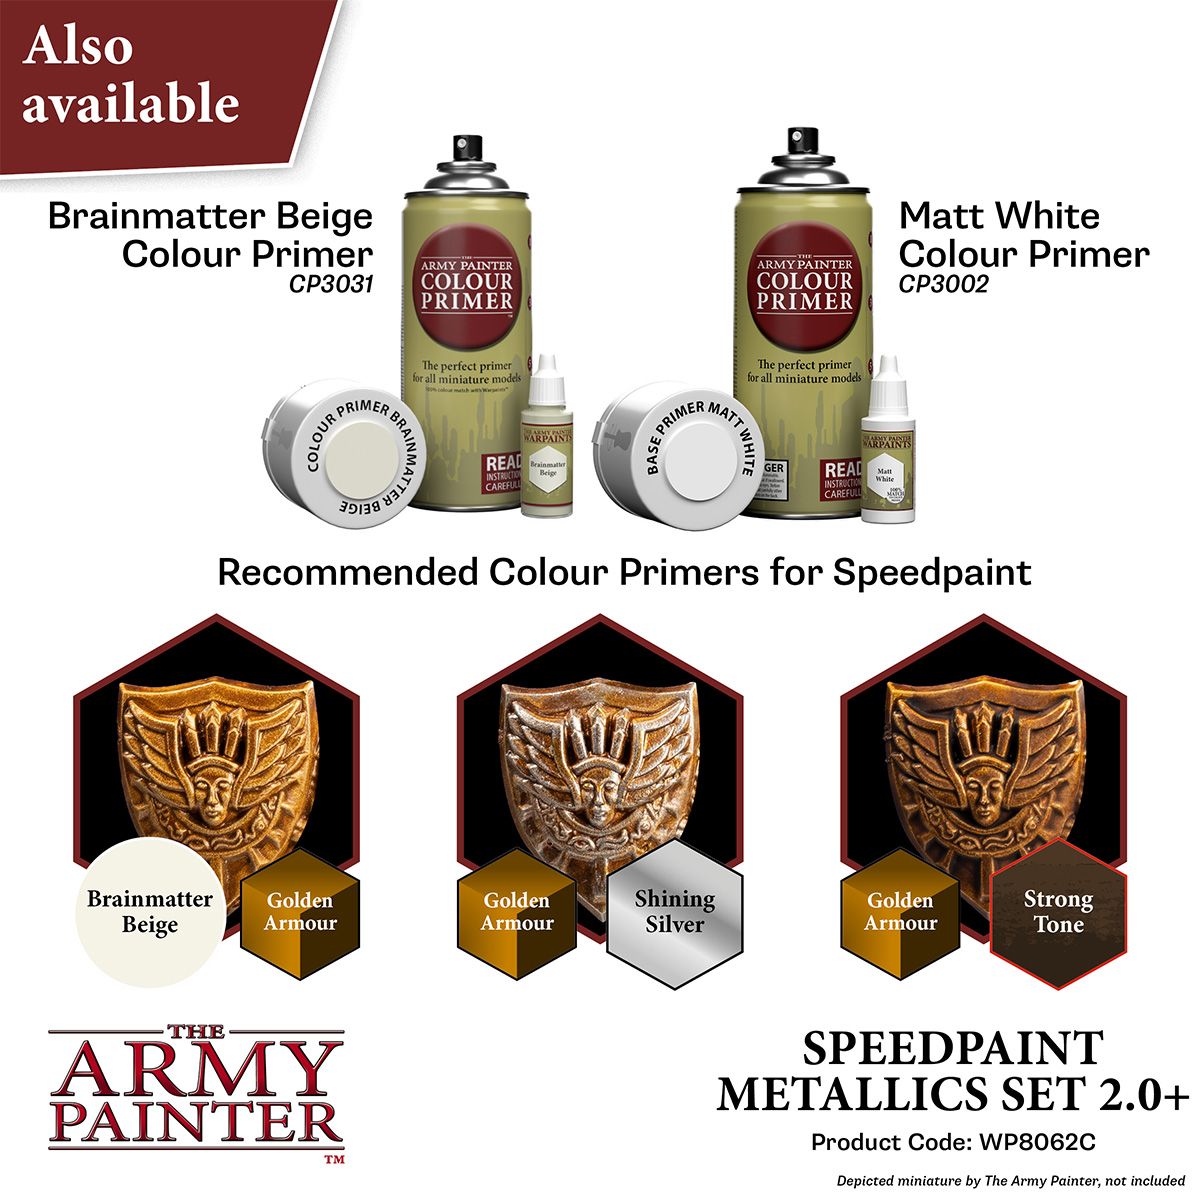 The Army Painter - Speedpaint Metallics Set 2.0+